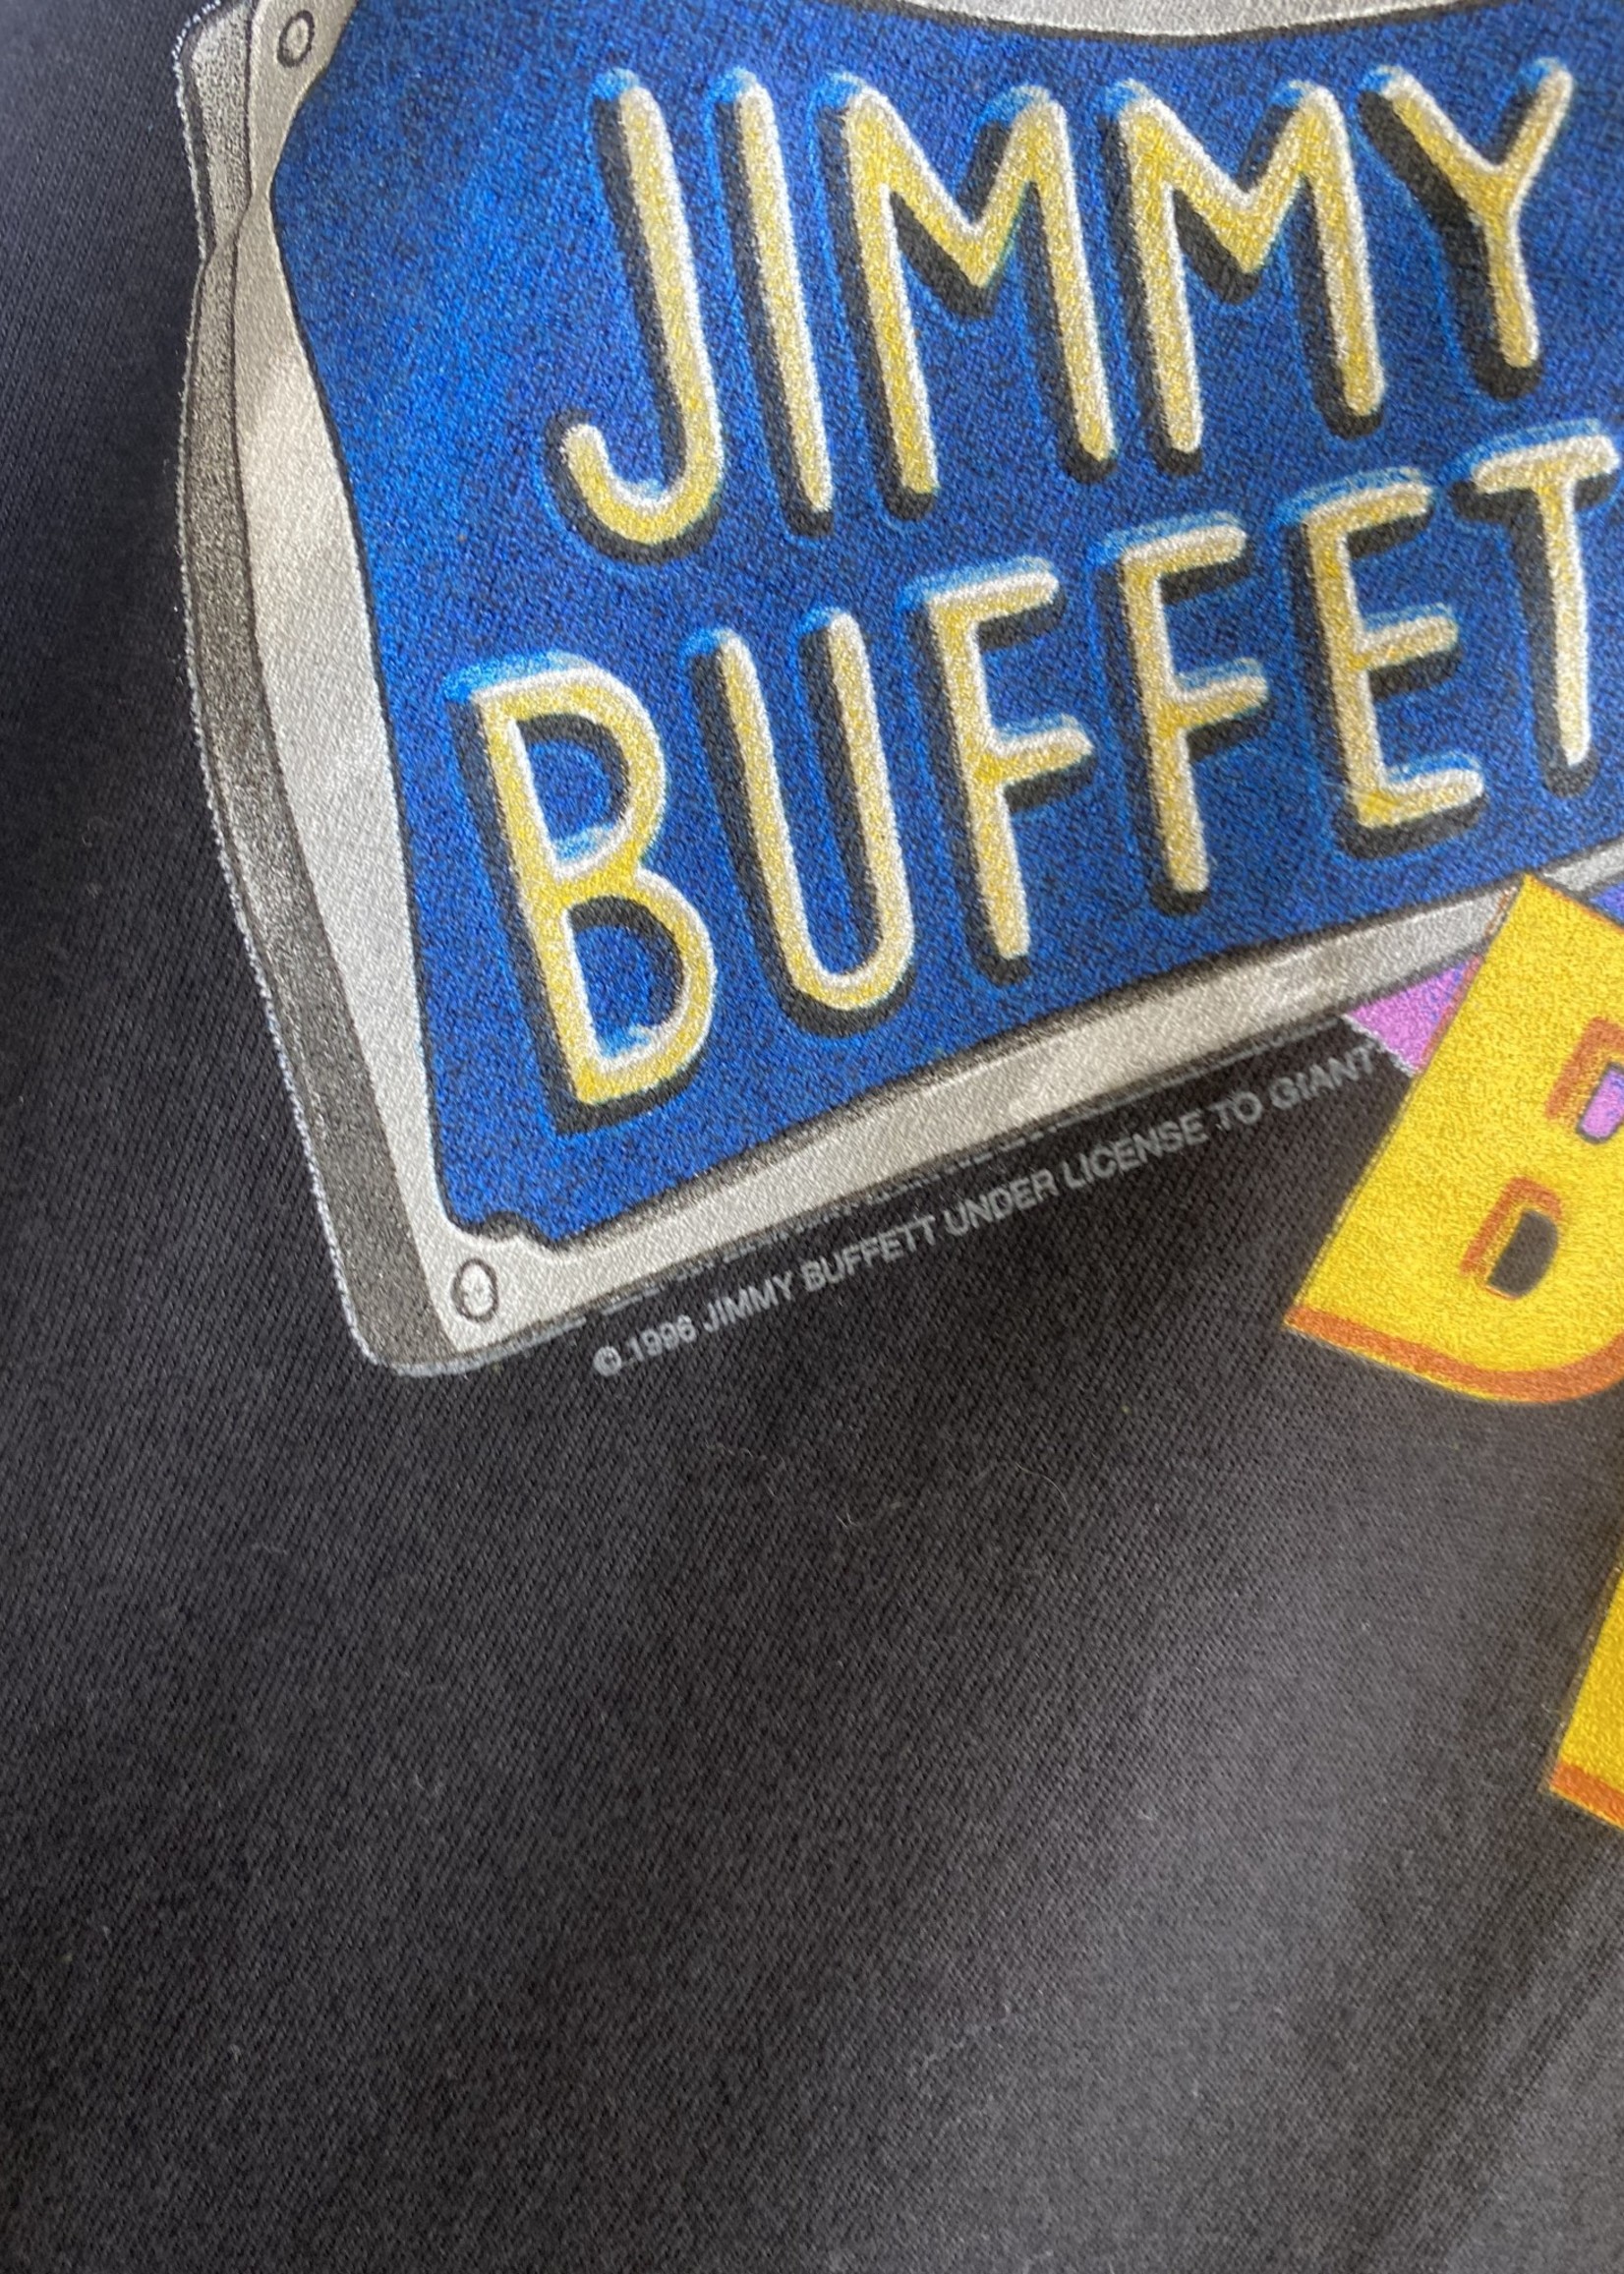 Vintage Jimmy Buffet Tee. Size XL.